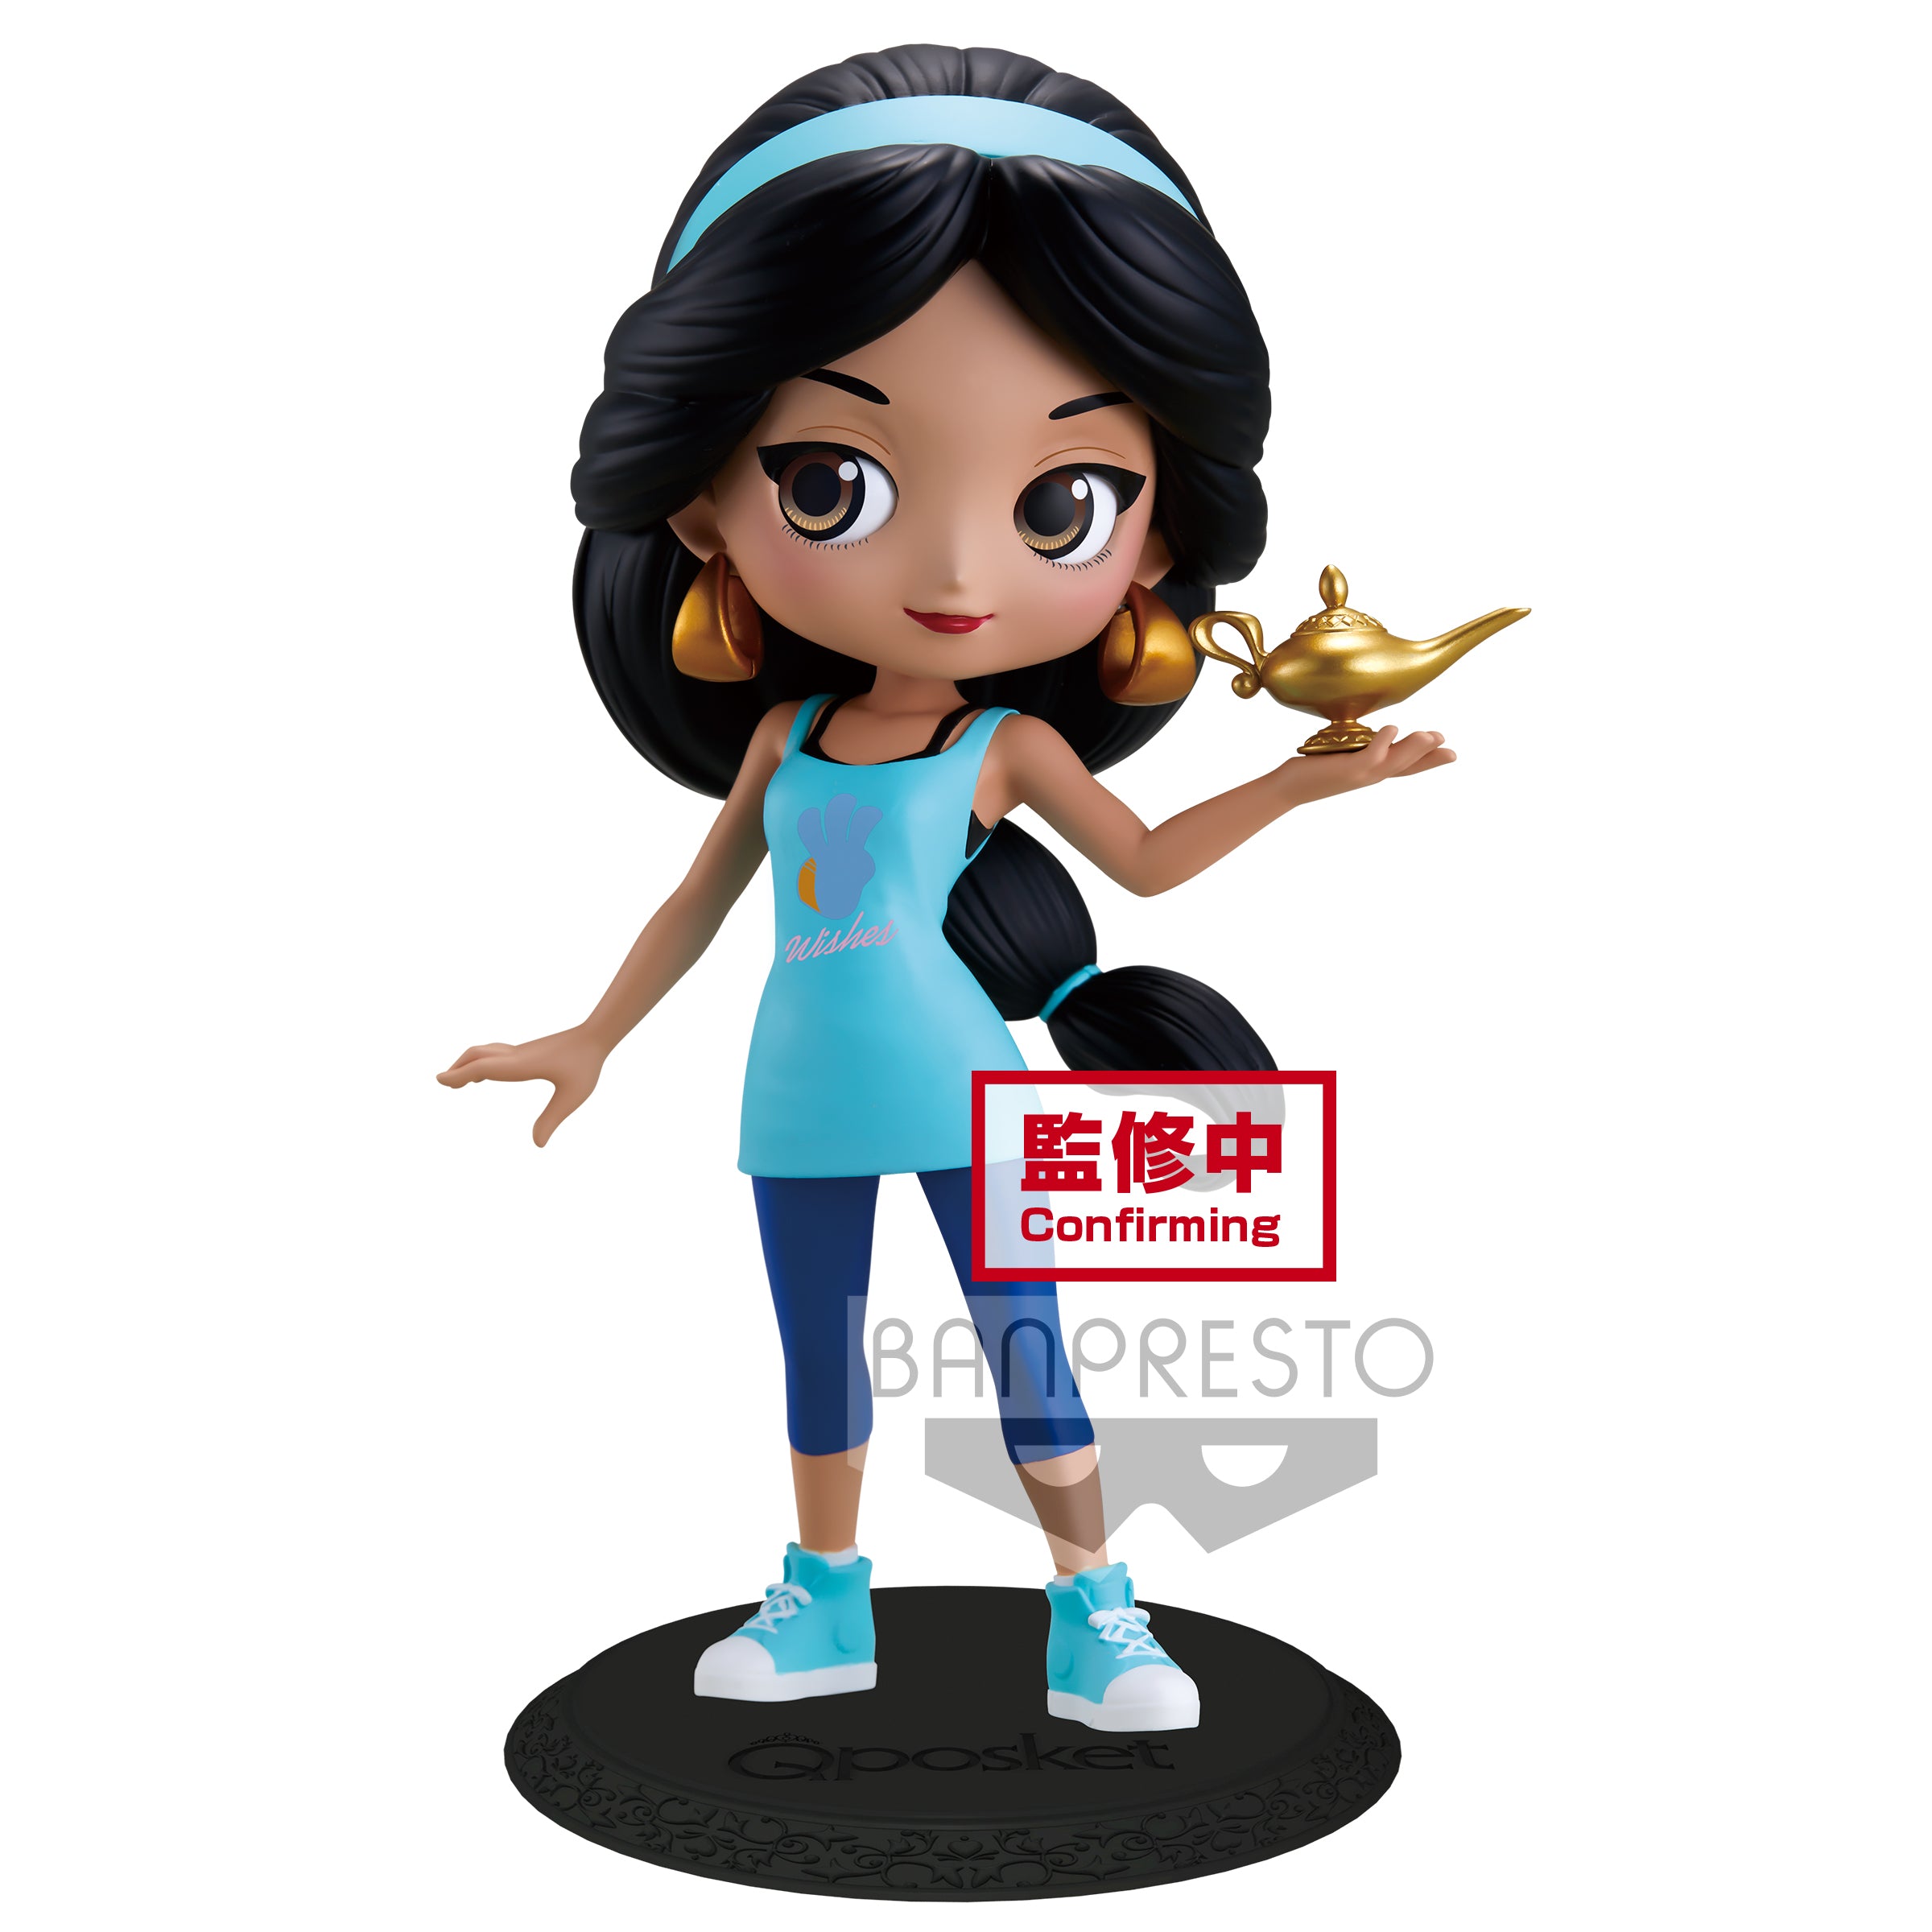 Disney Characters Q Posket Jasmine Avatar Style ver.A Figure 14cm